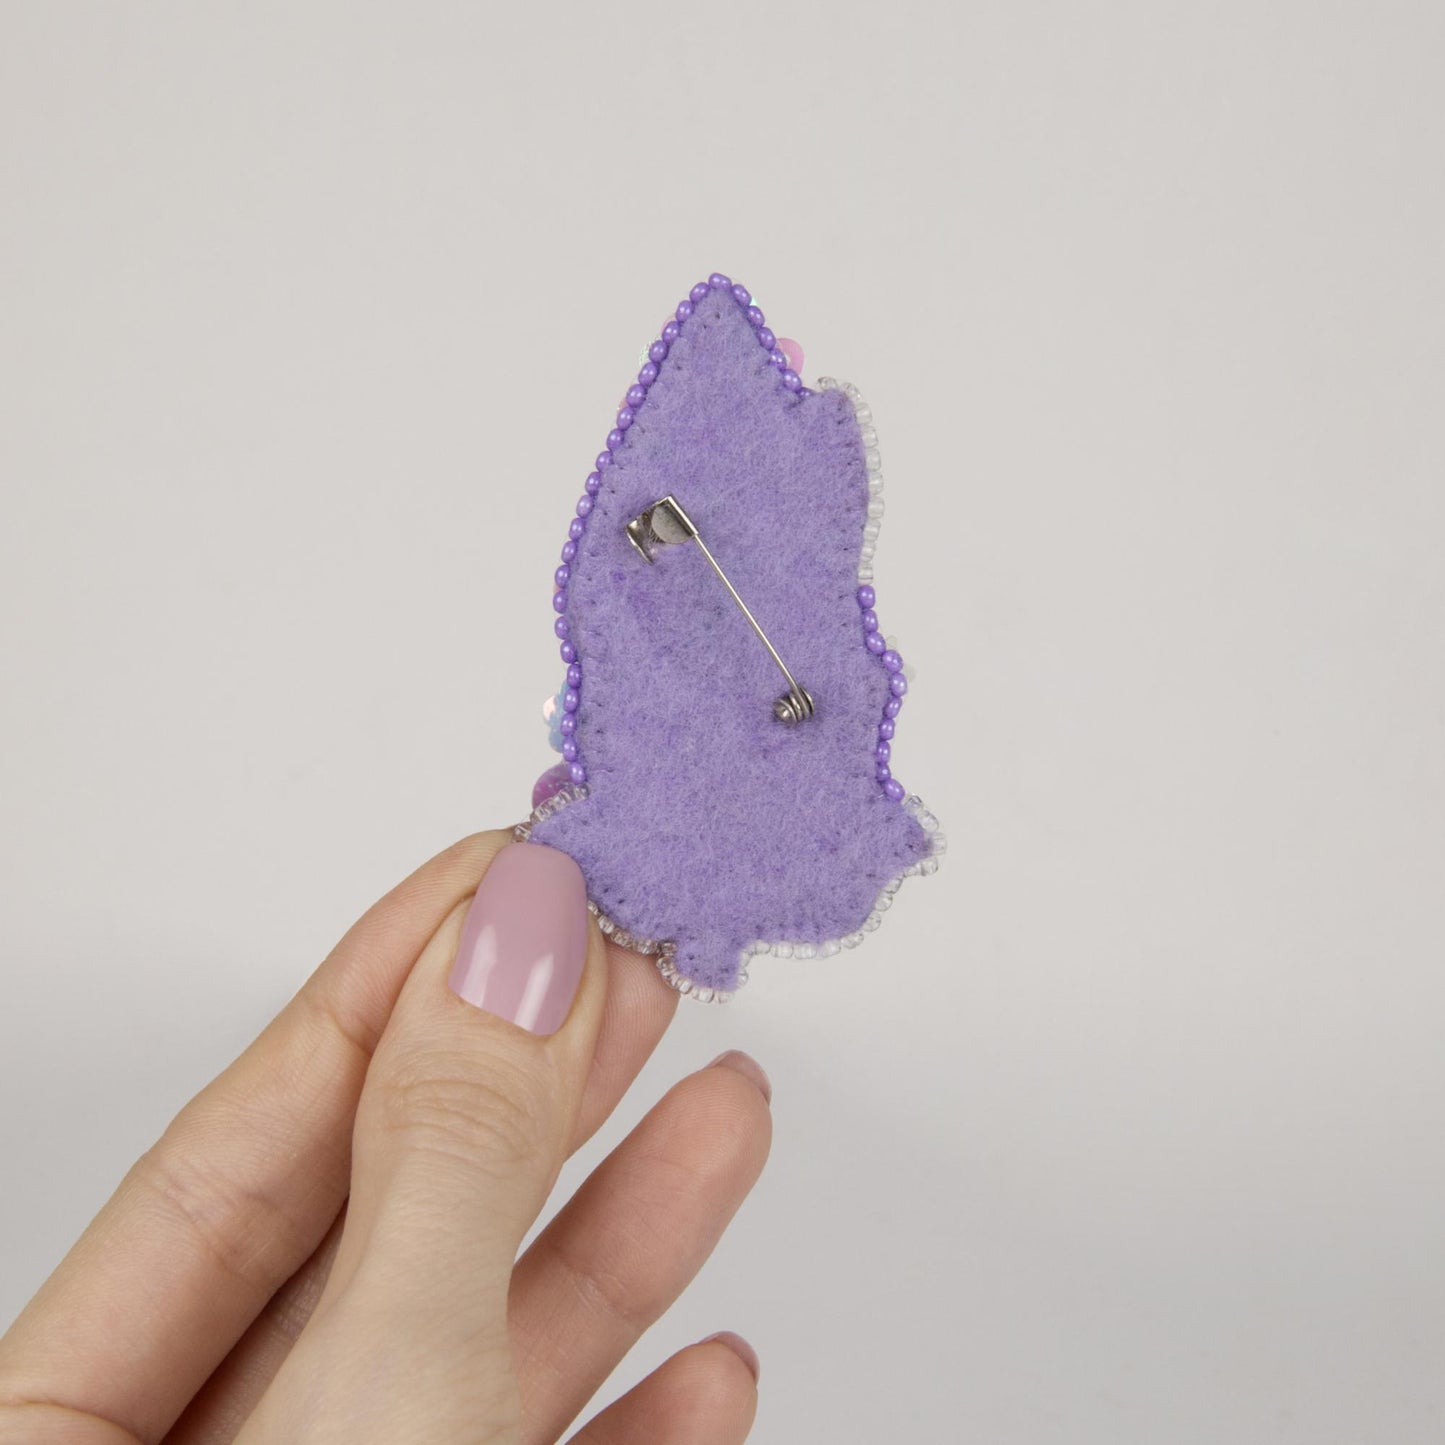 BP-276 Beadwork Embroidery kit for creating broоch Crystal Art "Lilac" Momentos Magicos - Leo Hobby